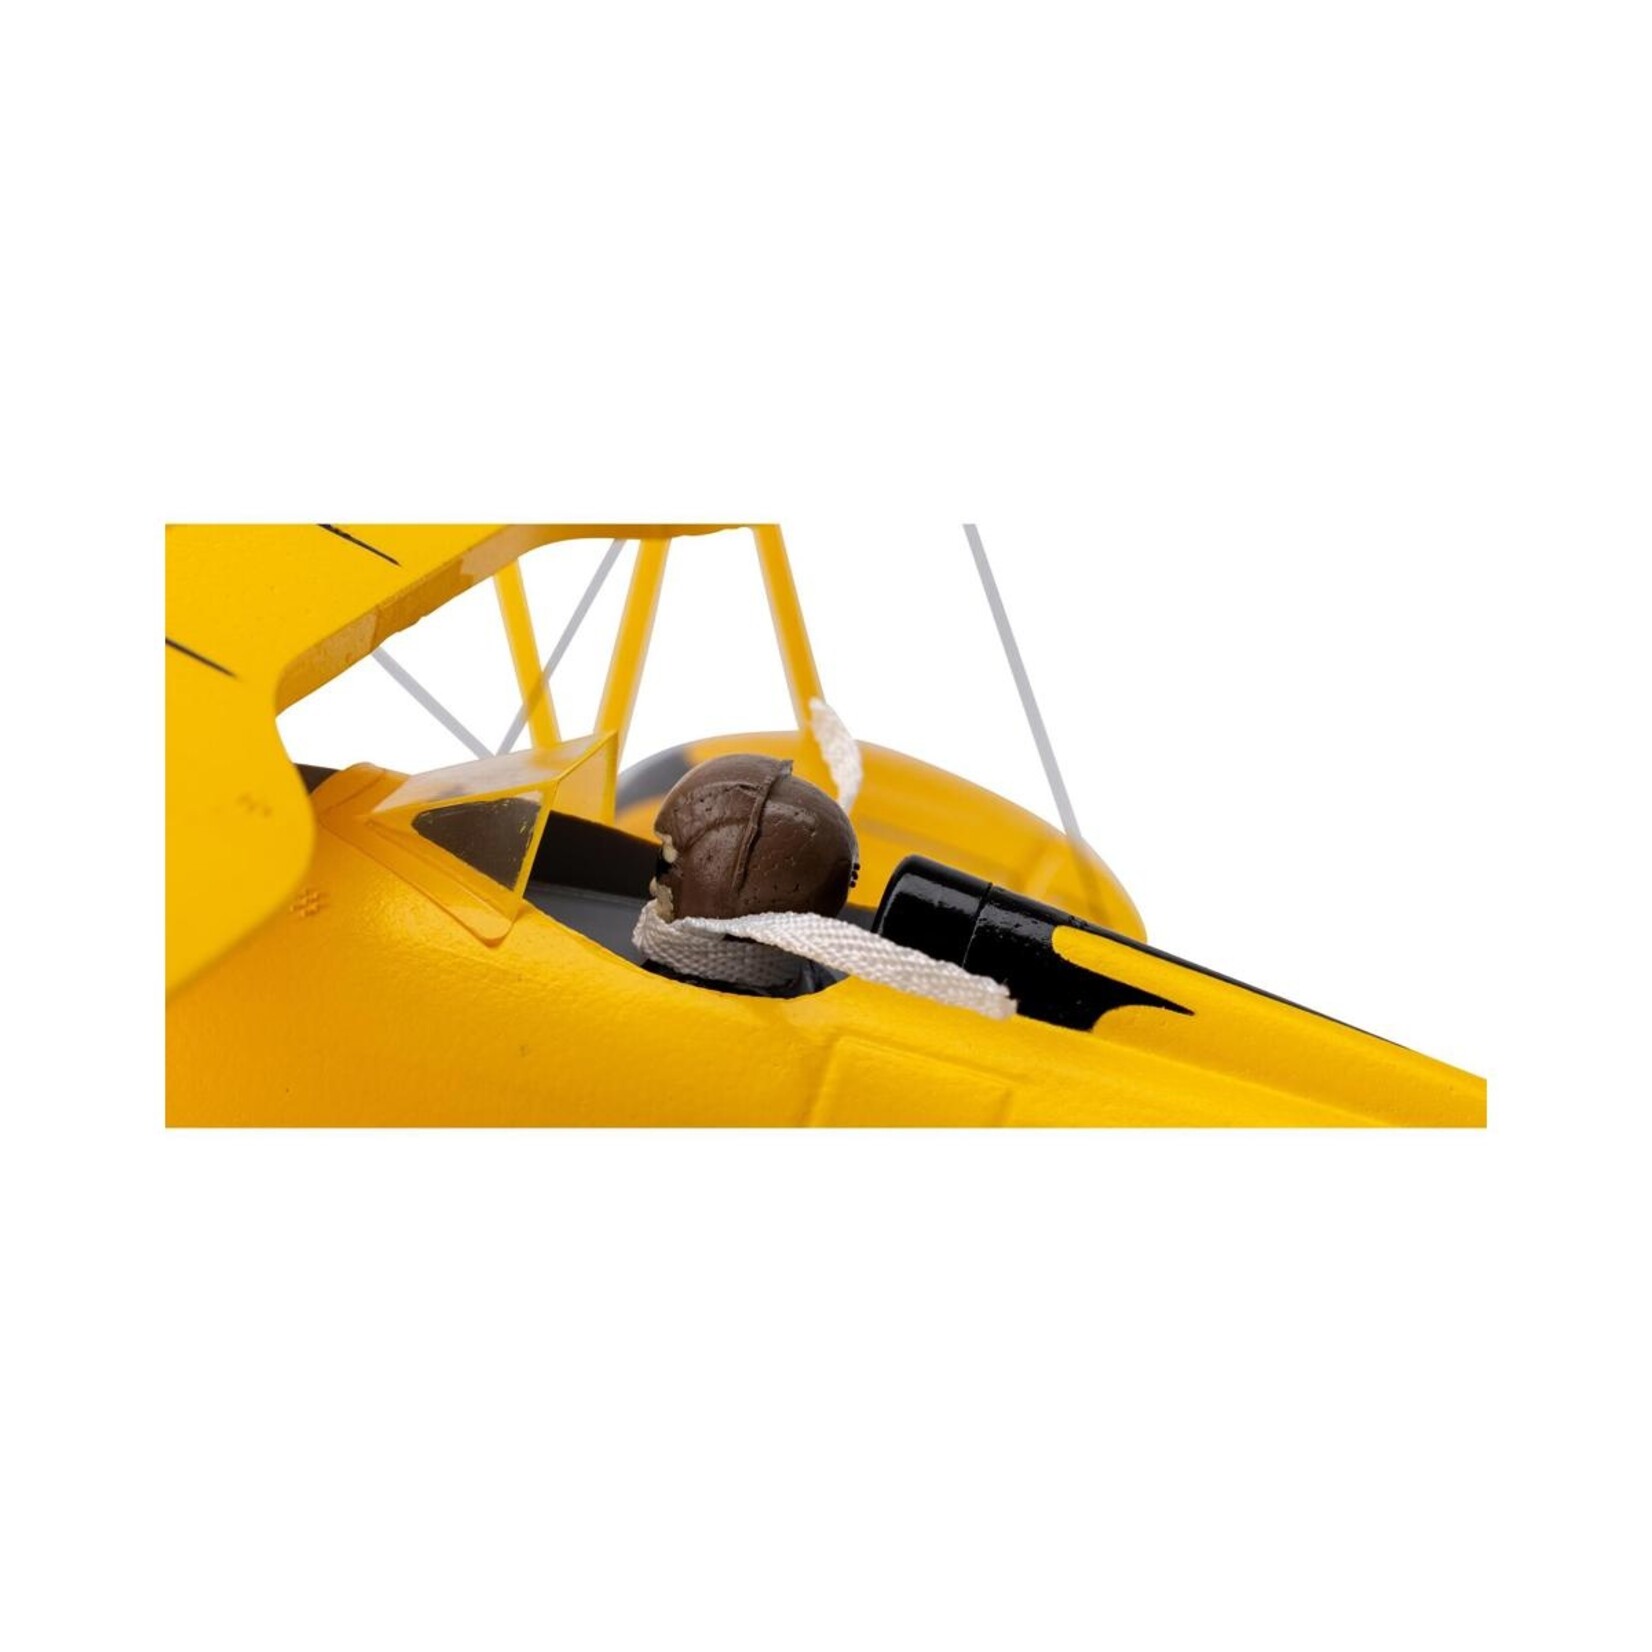 E-flite E-flite Ultra-Micro UMX Waco BNF Basic Electric Airplane (550mm) (Yellow) w/AS3X & SAFE #EFLU53550Y